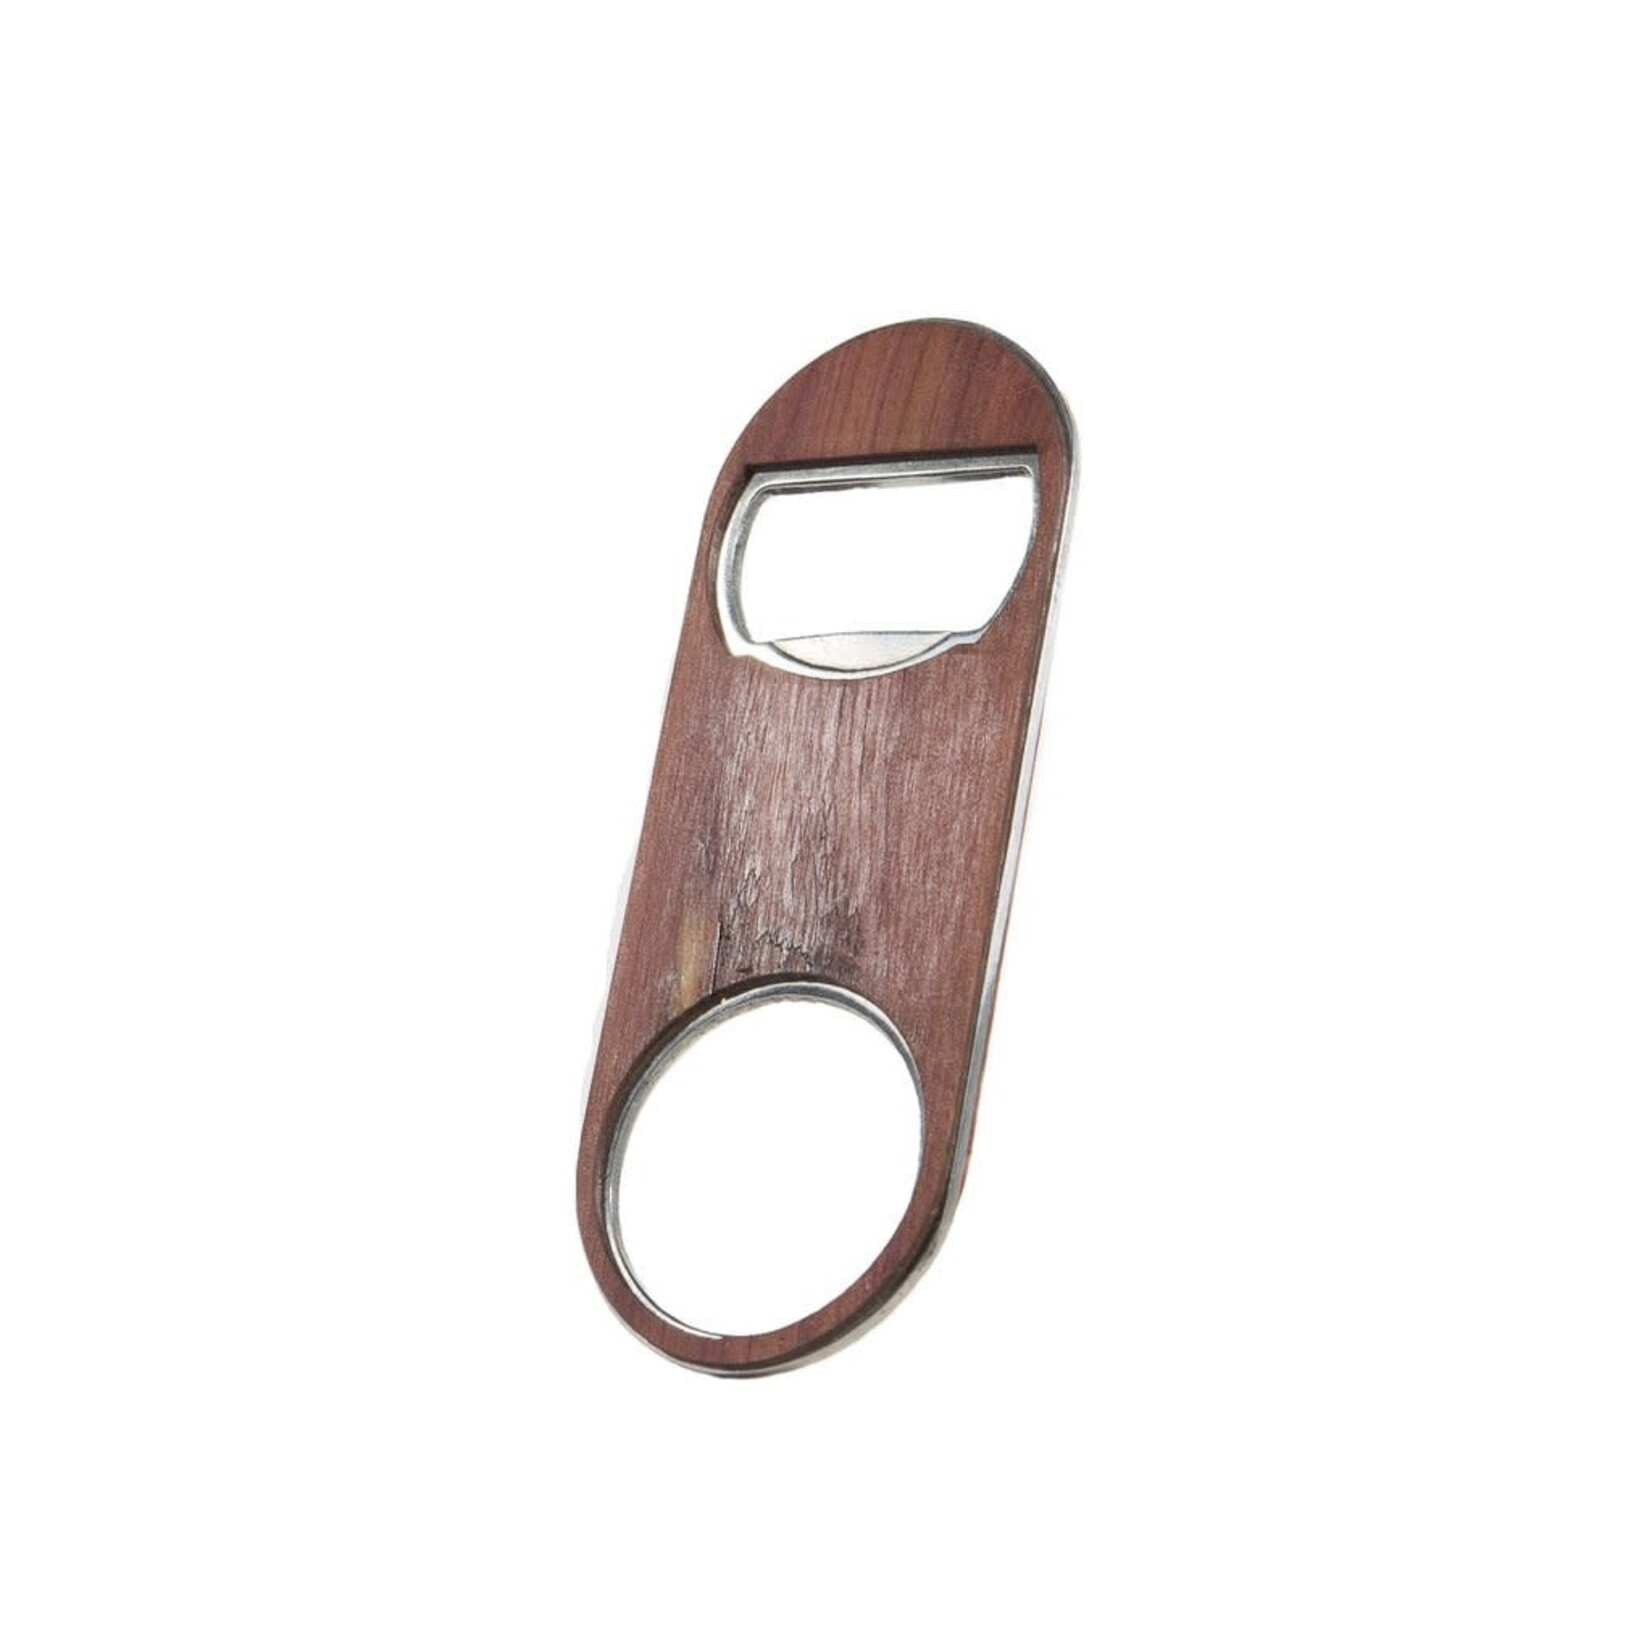 WUDN Handcrafted Wooden Keychain Bottle Opener